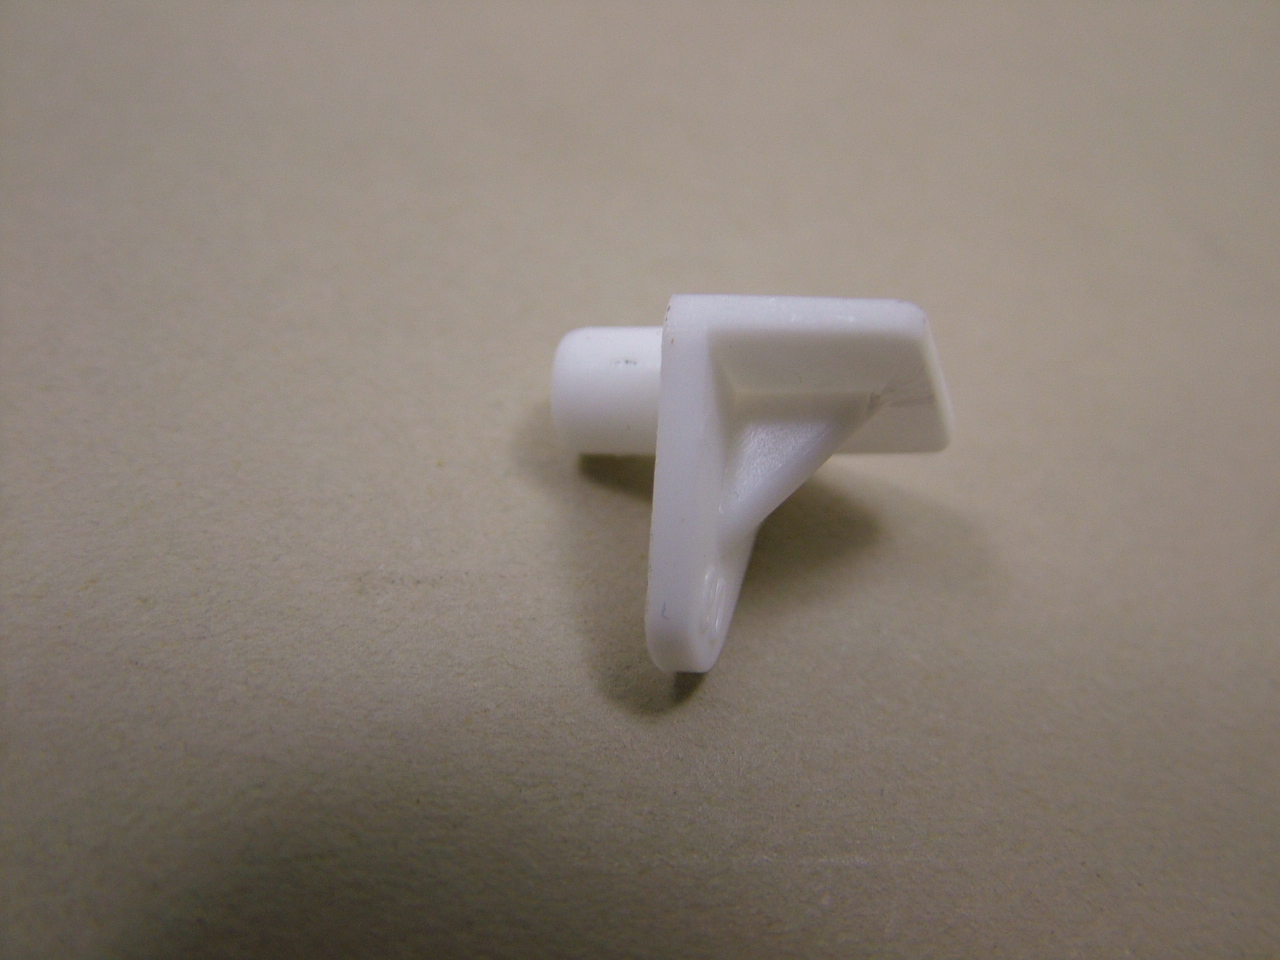 White plastic angle bracket type, 5mm peg